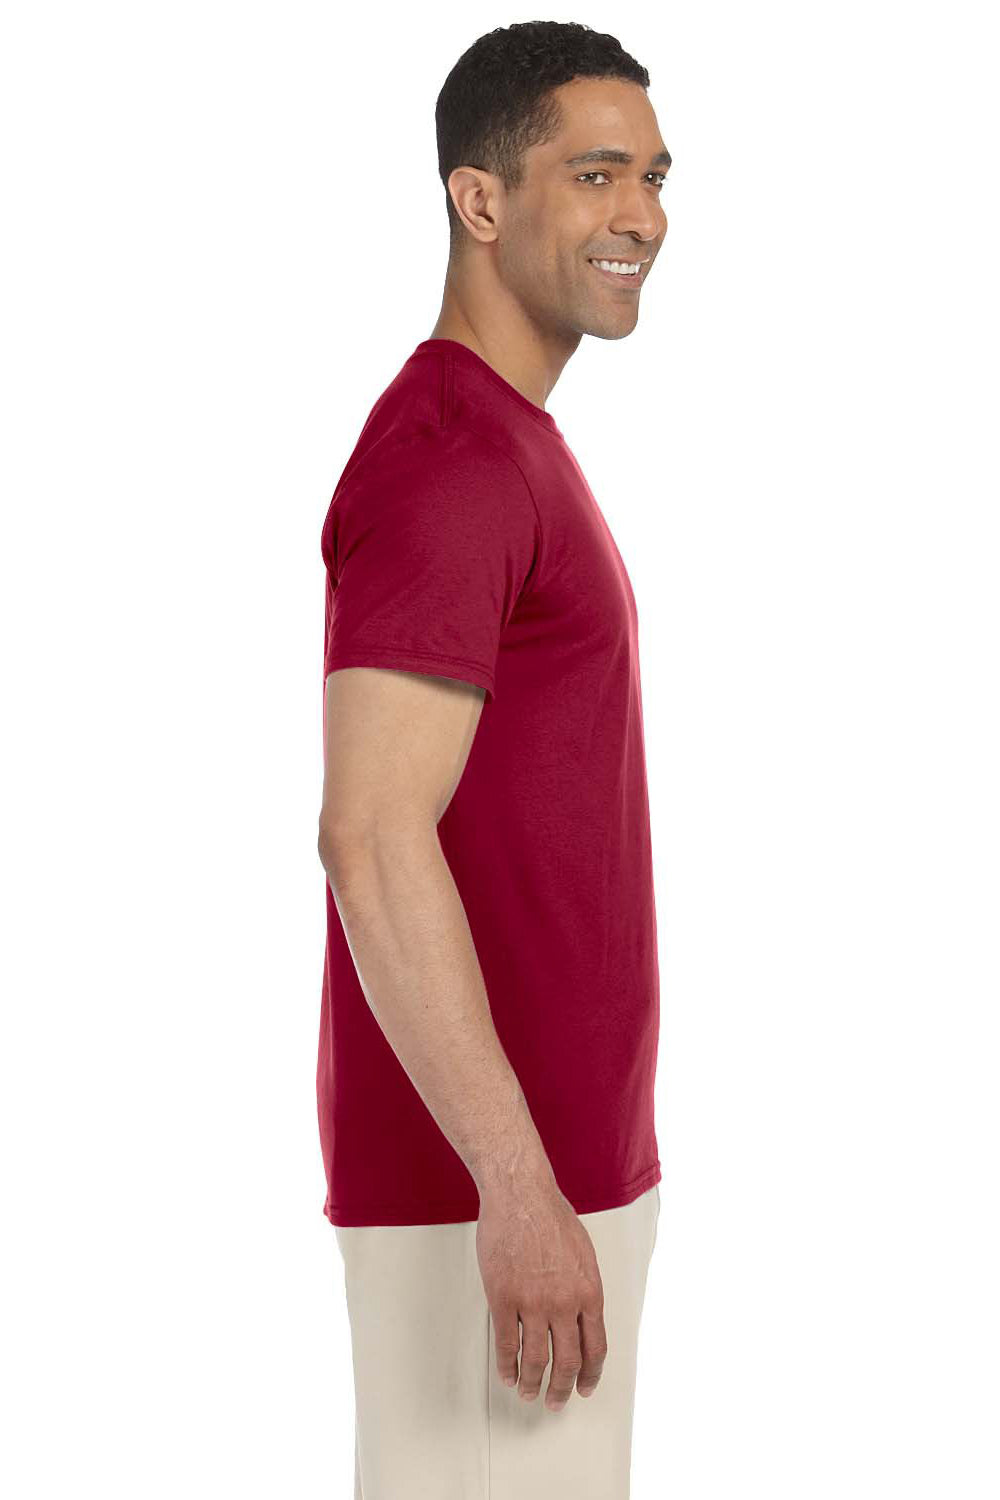 Gildan G640 Mens Softstyle Short Sleeve Crewneck T-Shirt Cardinal Red Side